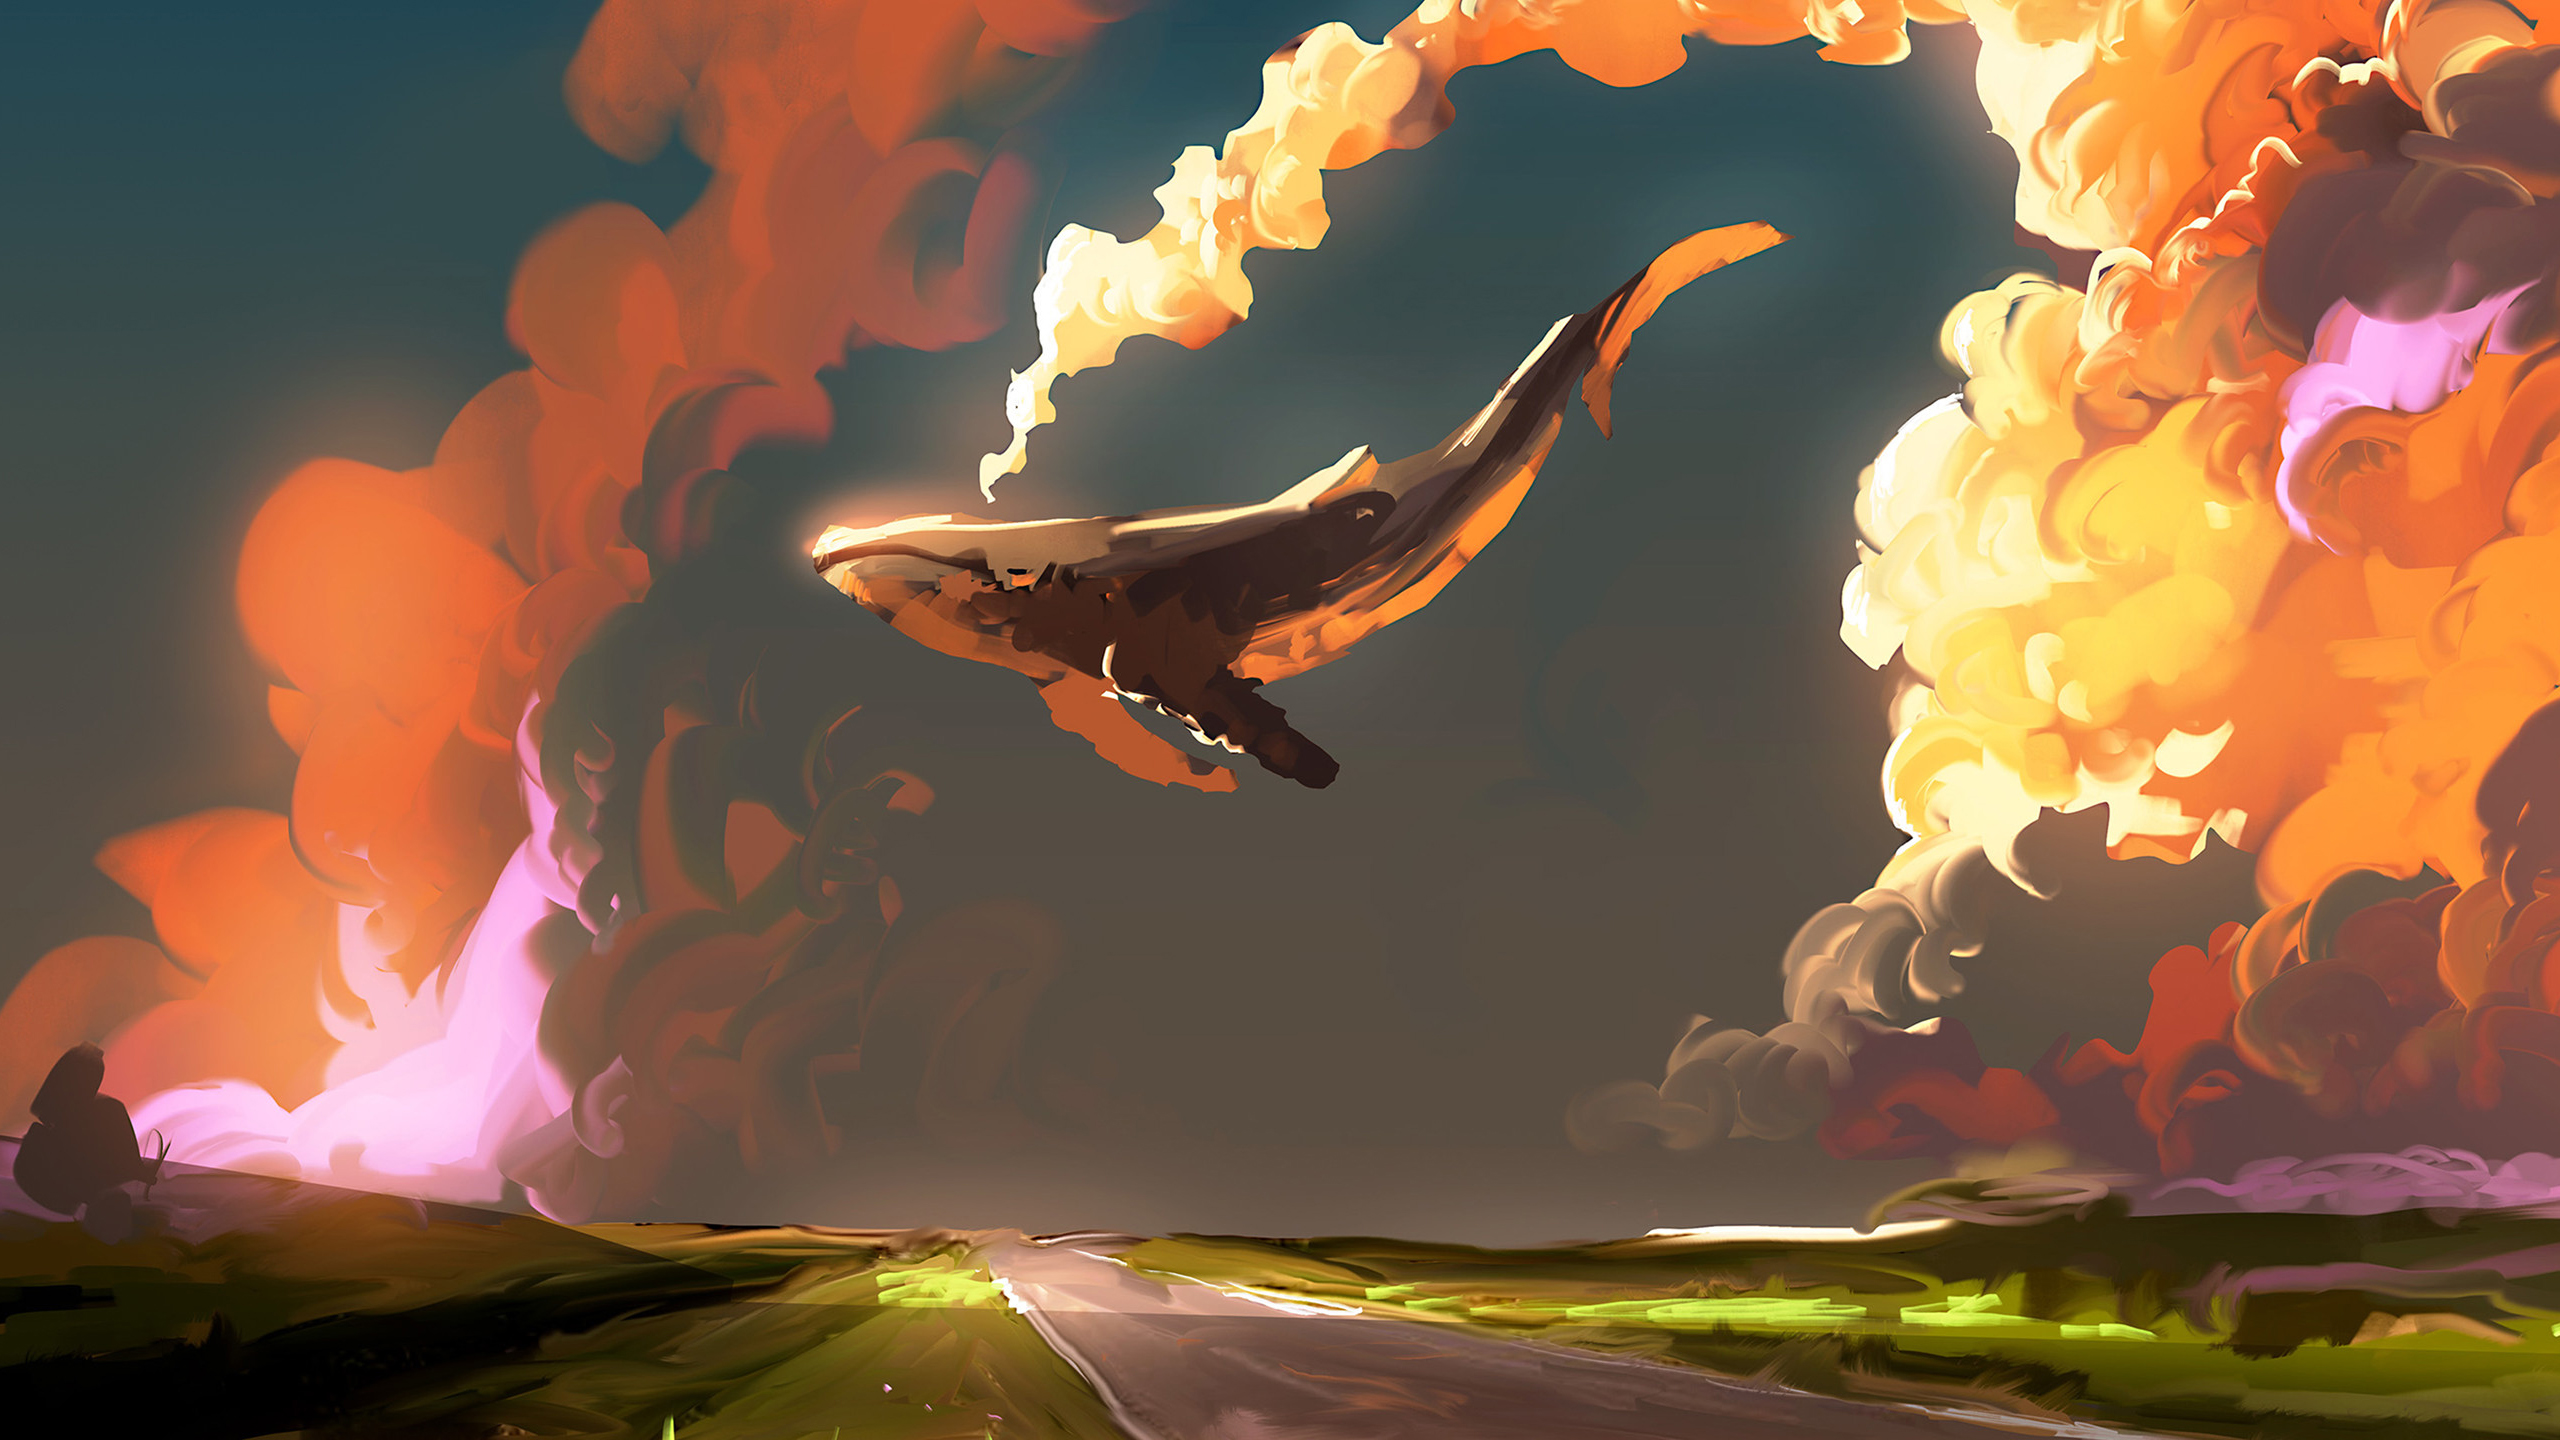 Whale Whale Shark Sky Artwork Fantasy Art Dominik Mayer 2560x1440